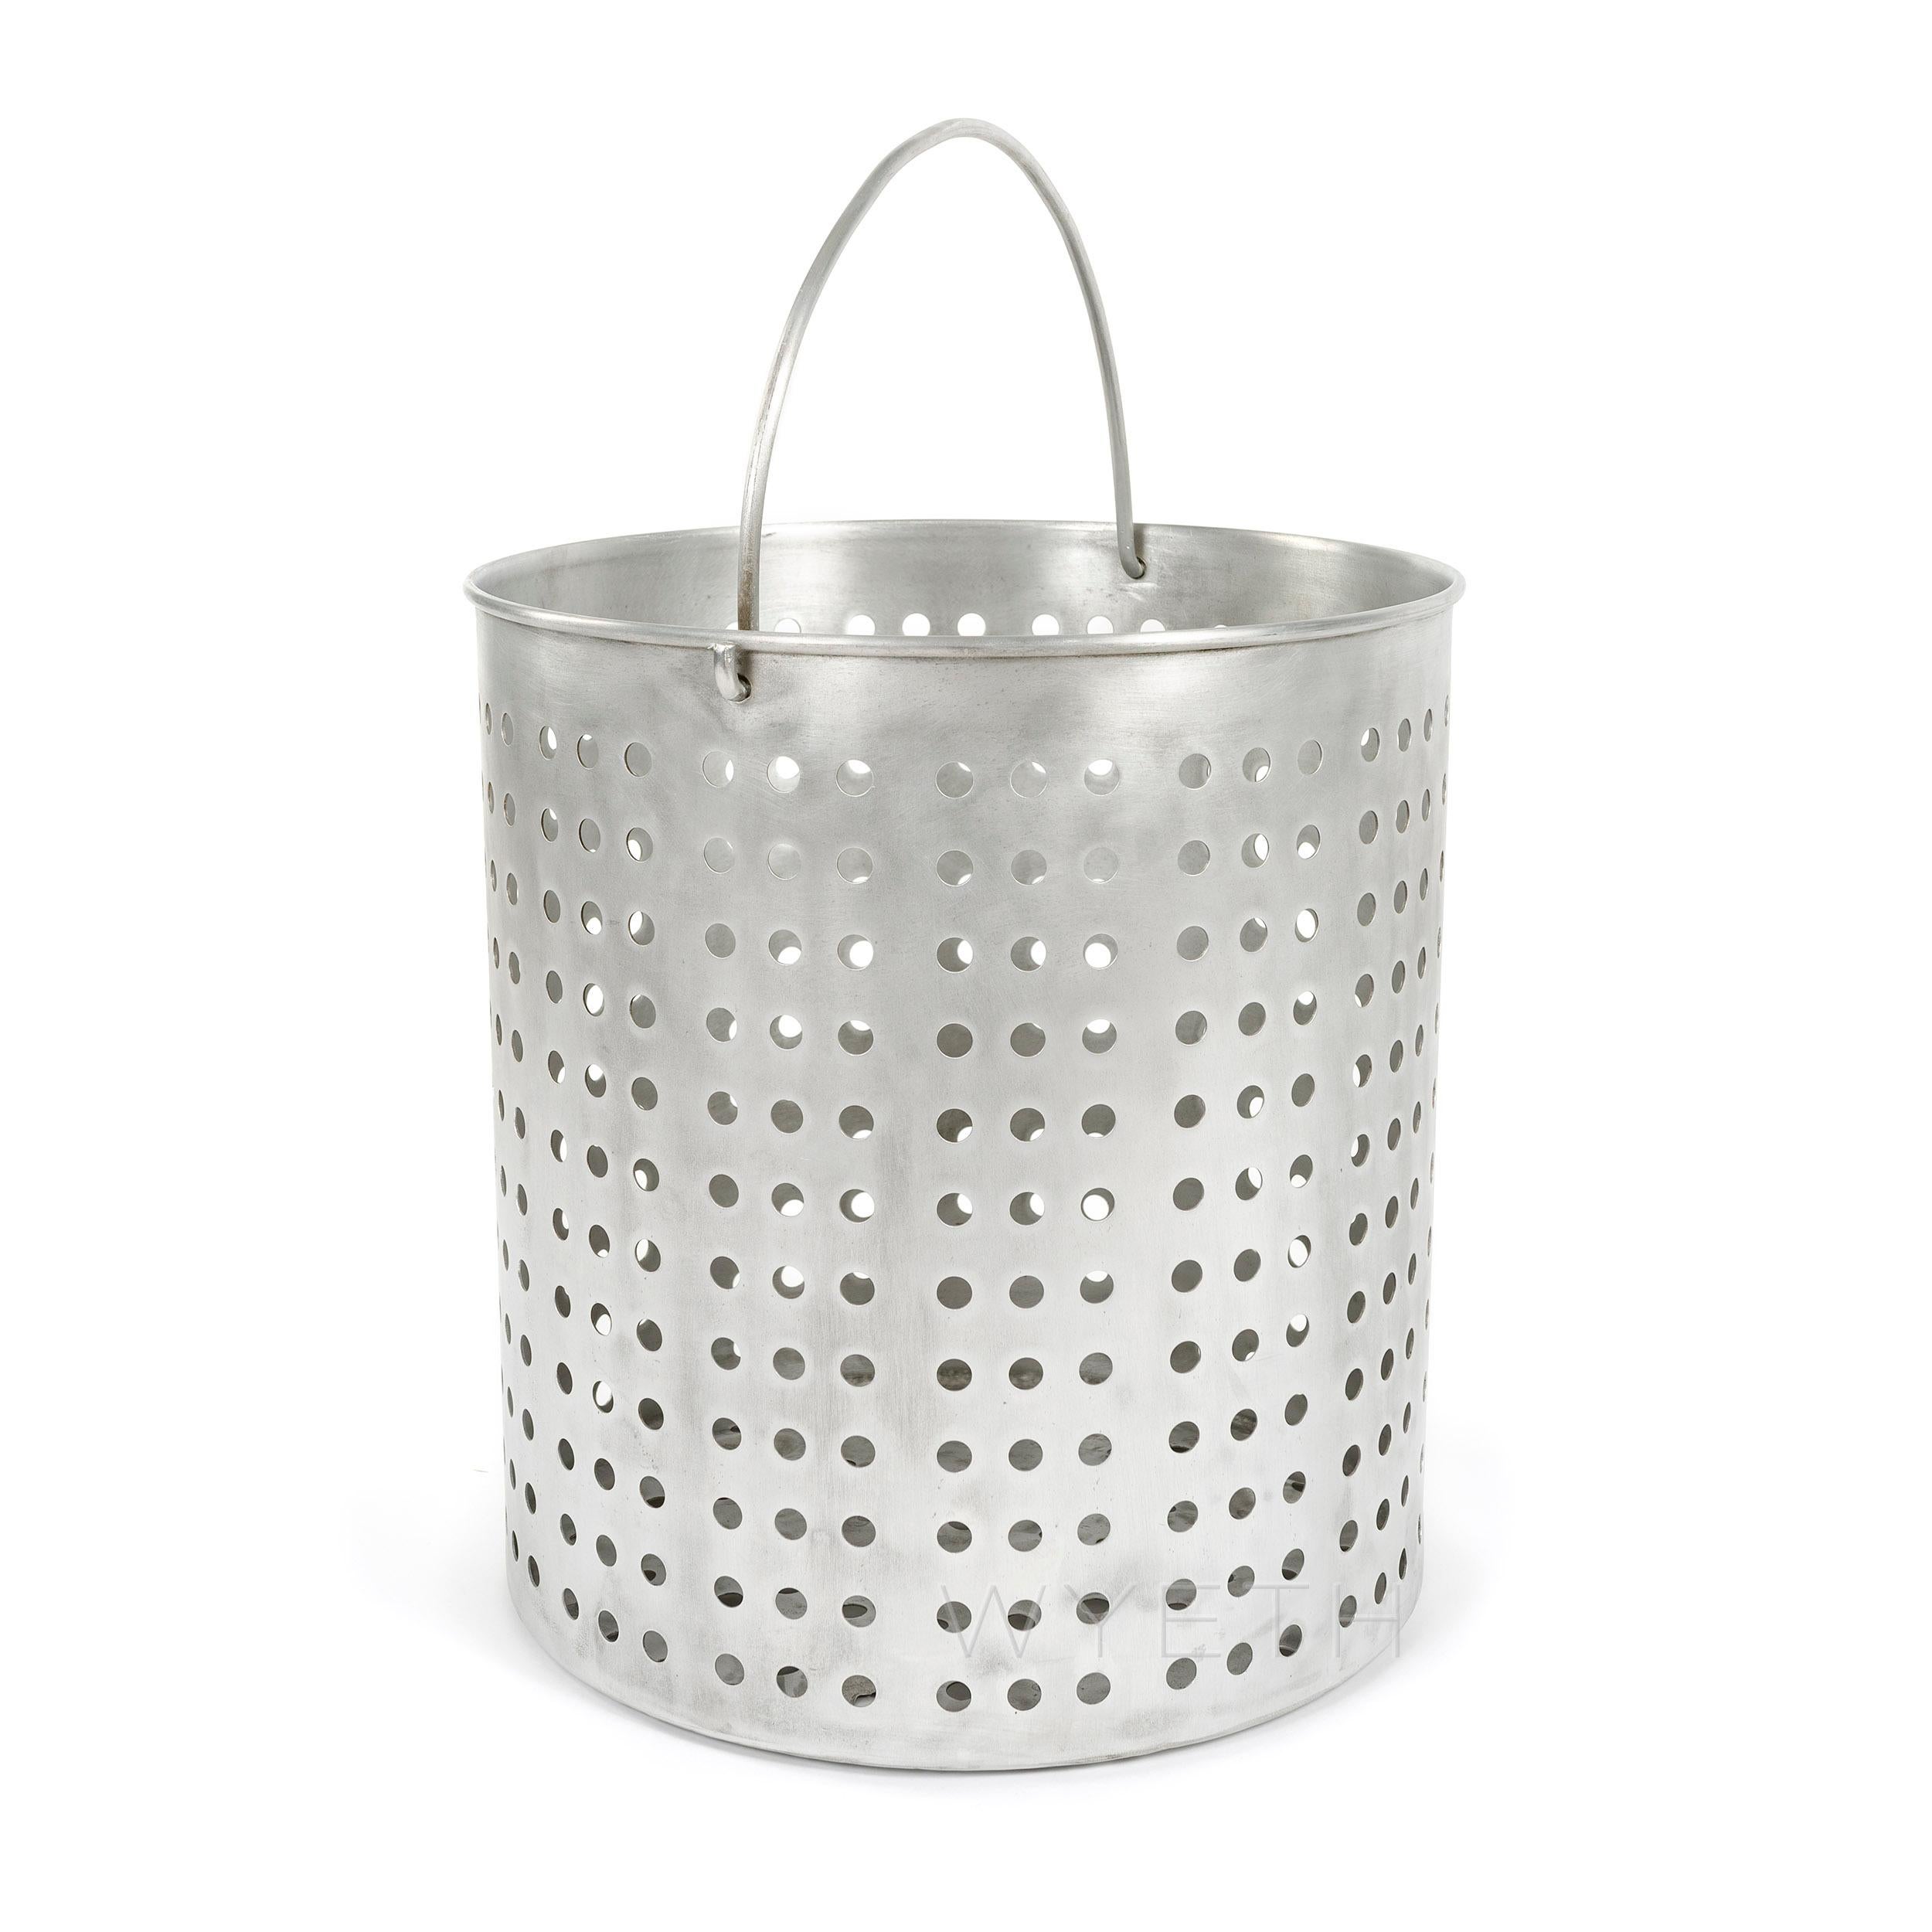 Industrial 1960s Spun Aluminum Large Perforated Basket